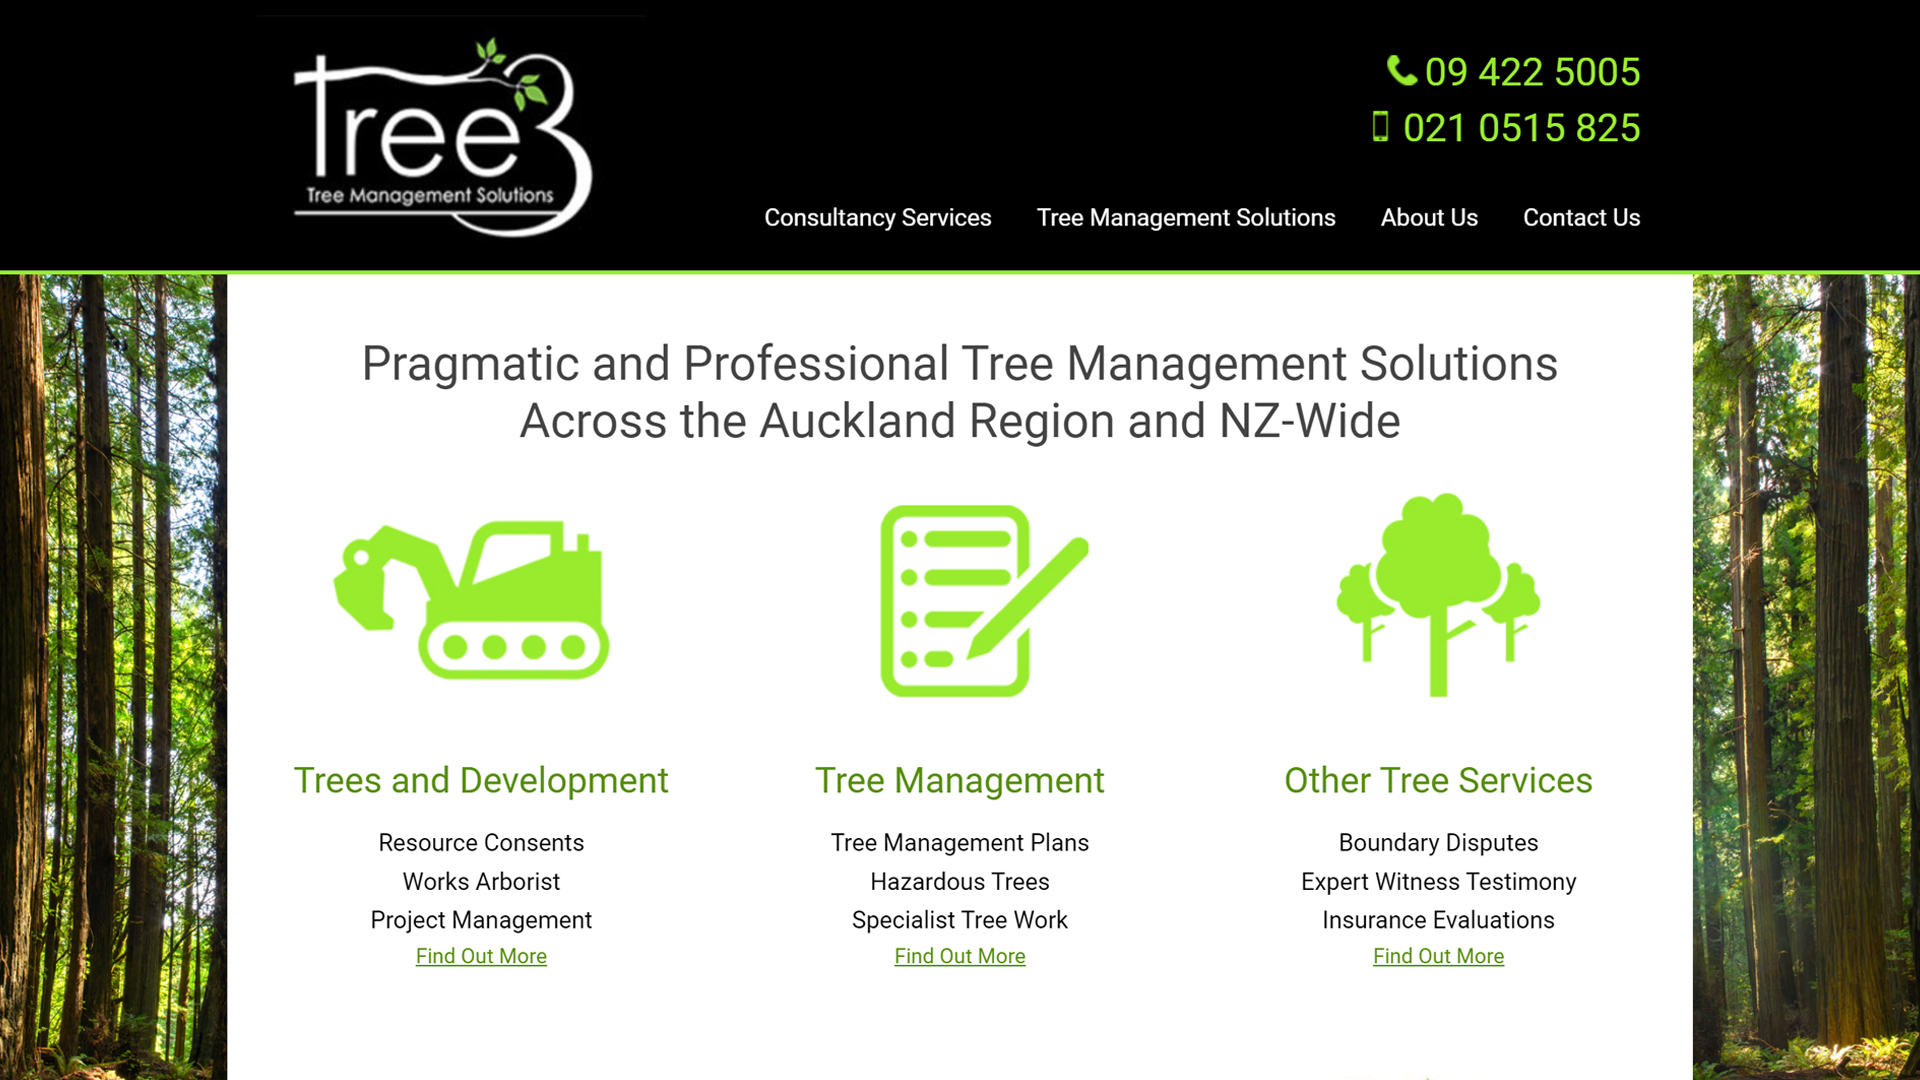 Tree3 Tree Management